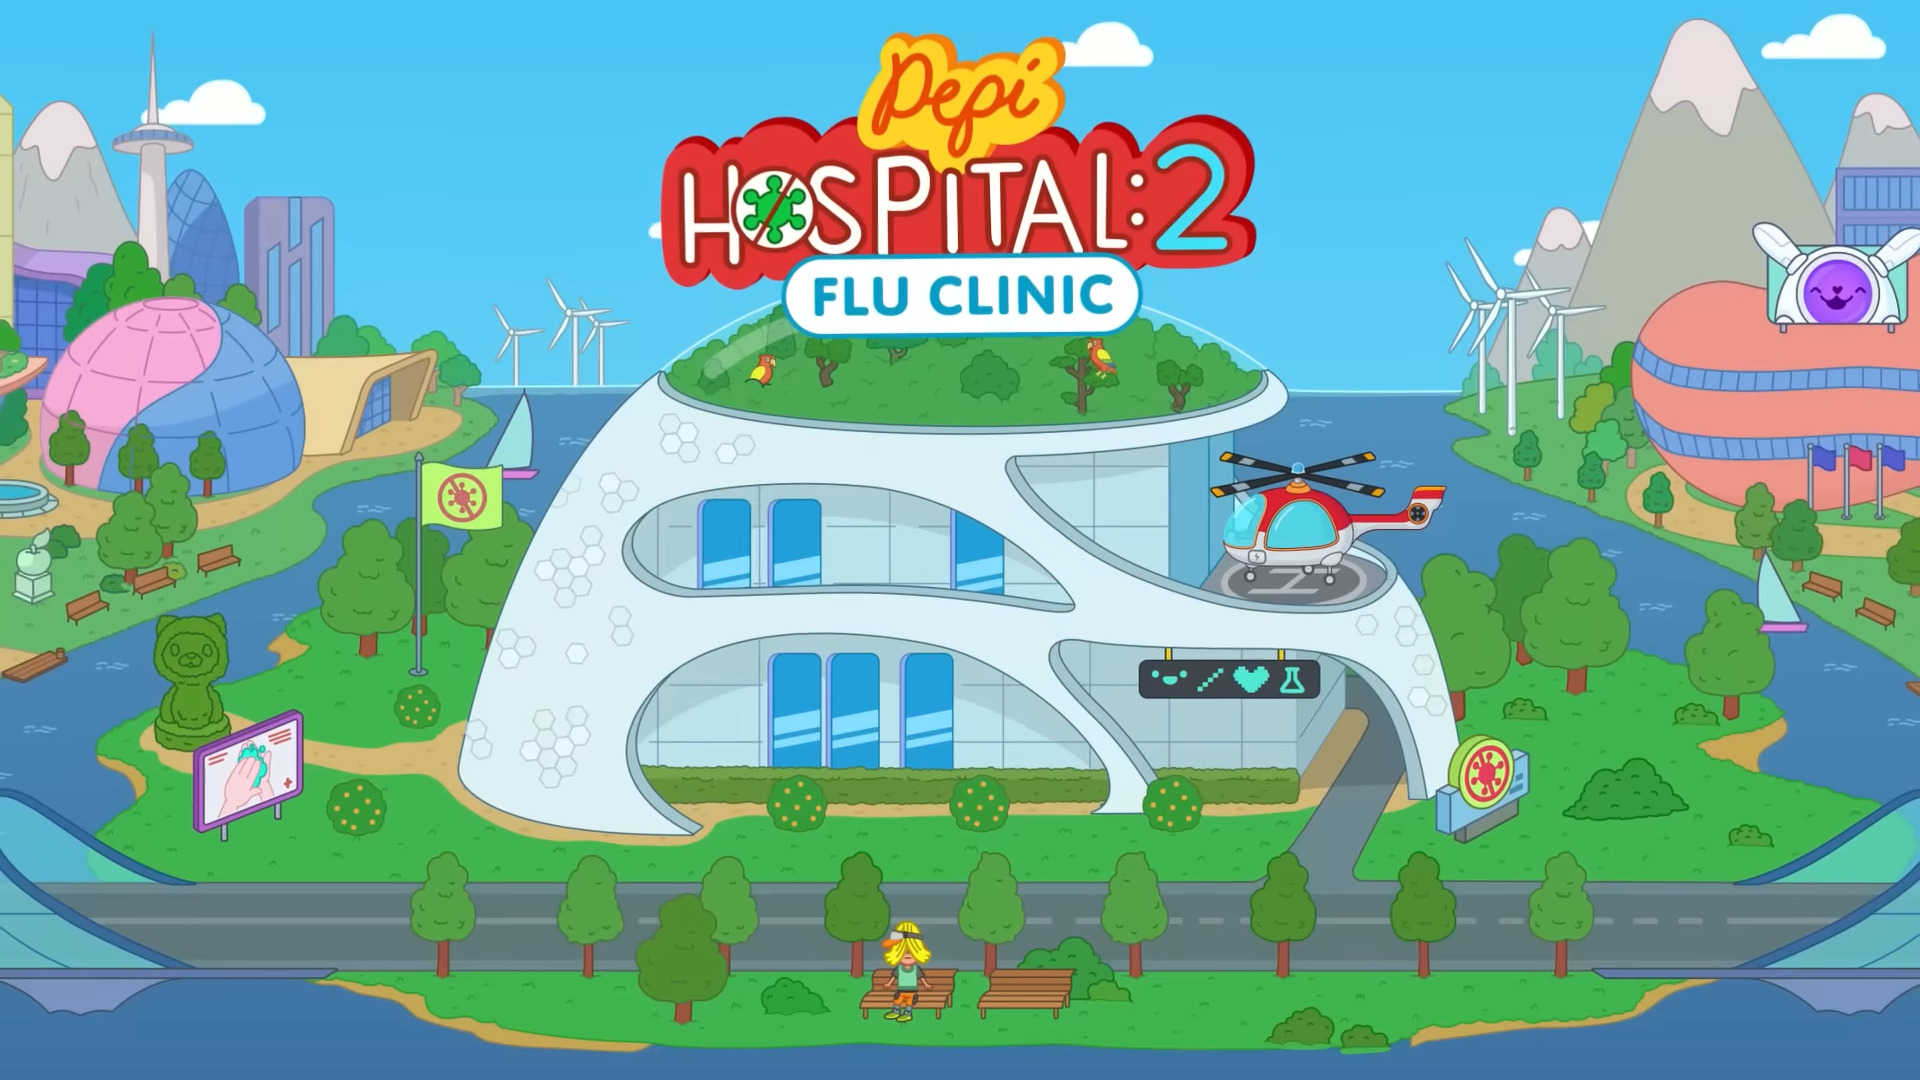 Descargar Pepi Hospital 2: Flu Clinic gratis para Android.